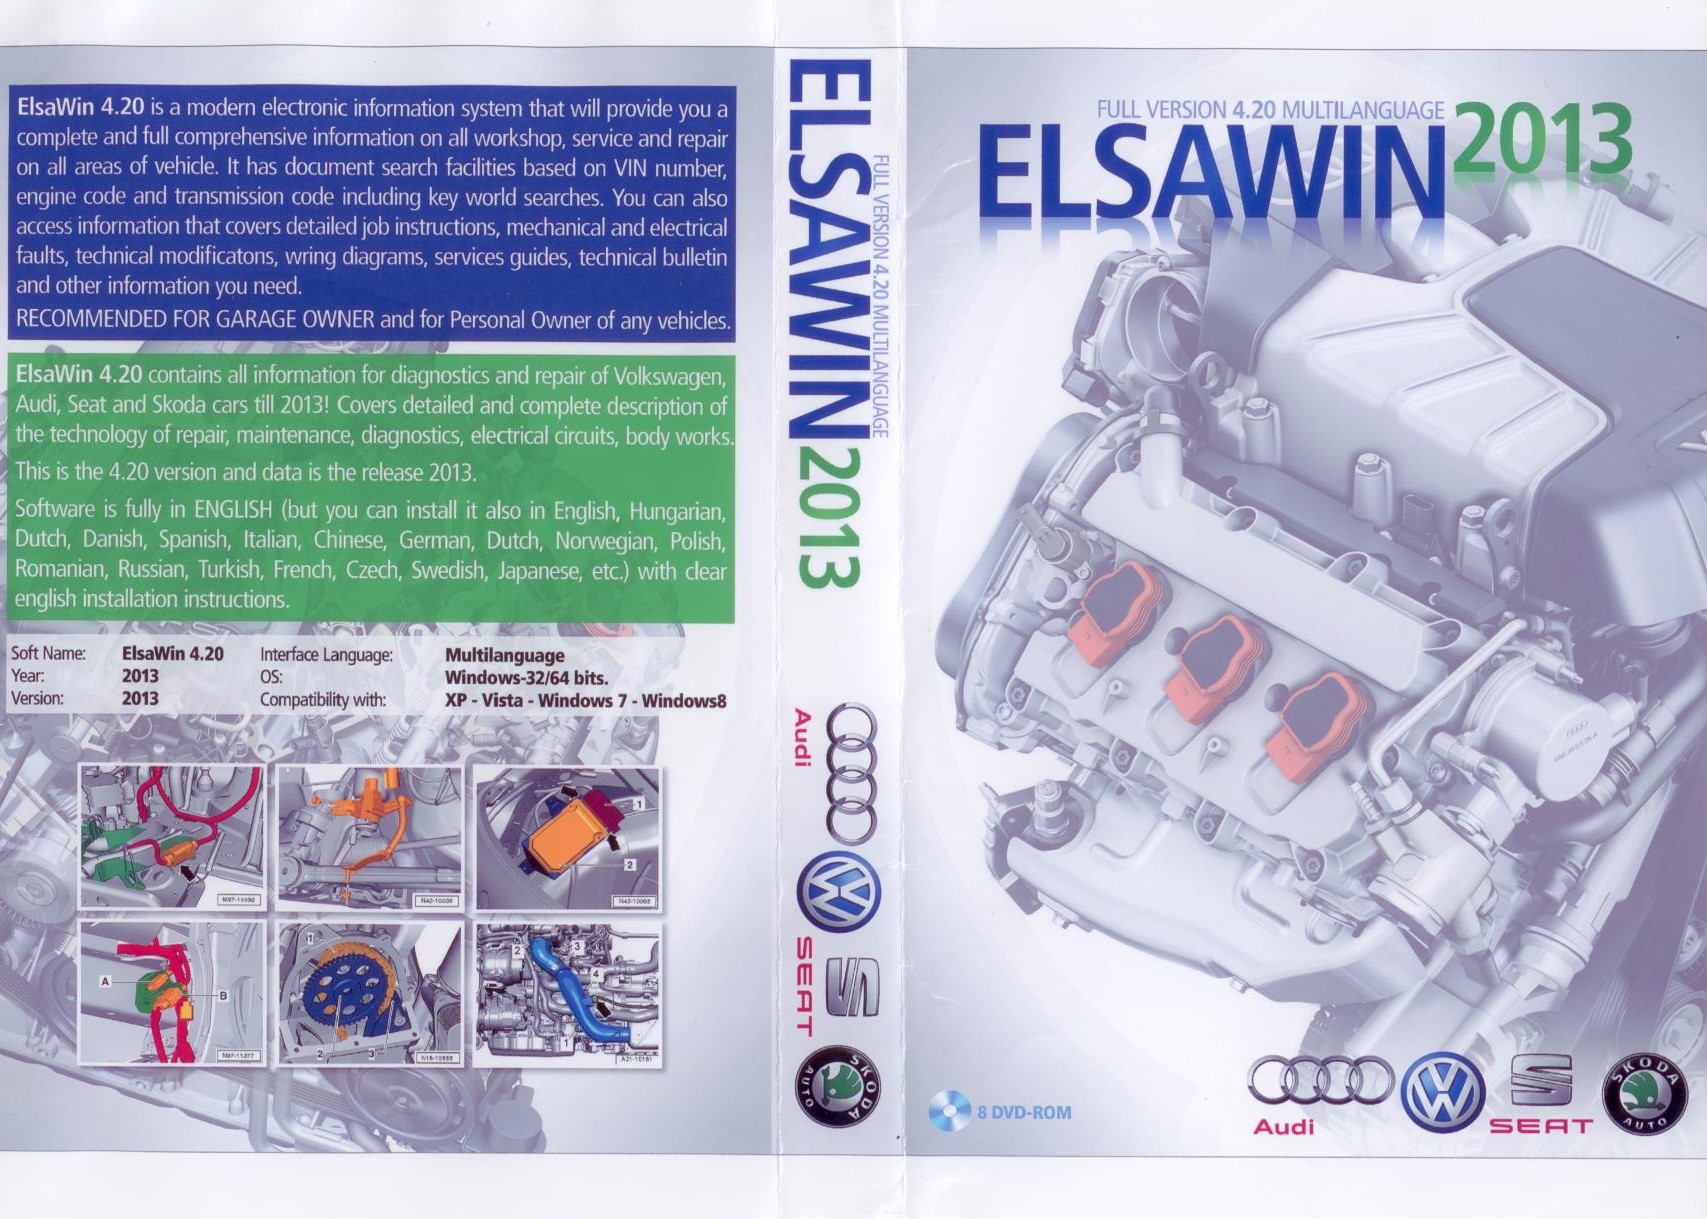 elsawin seat data dvd definition